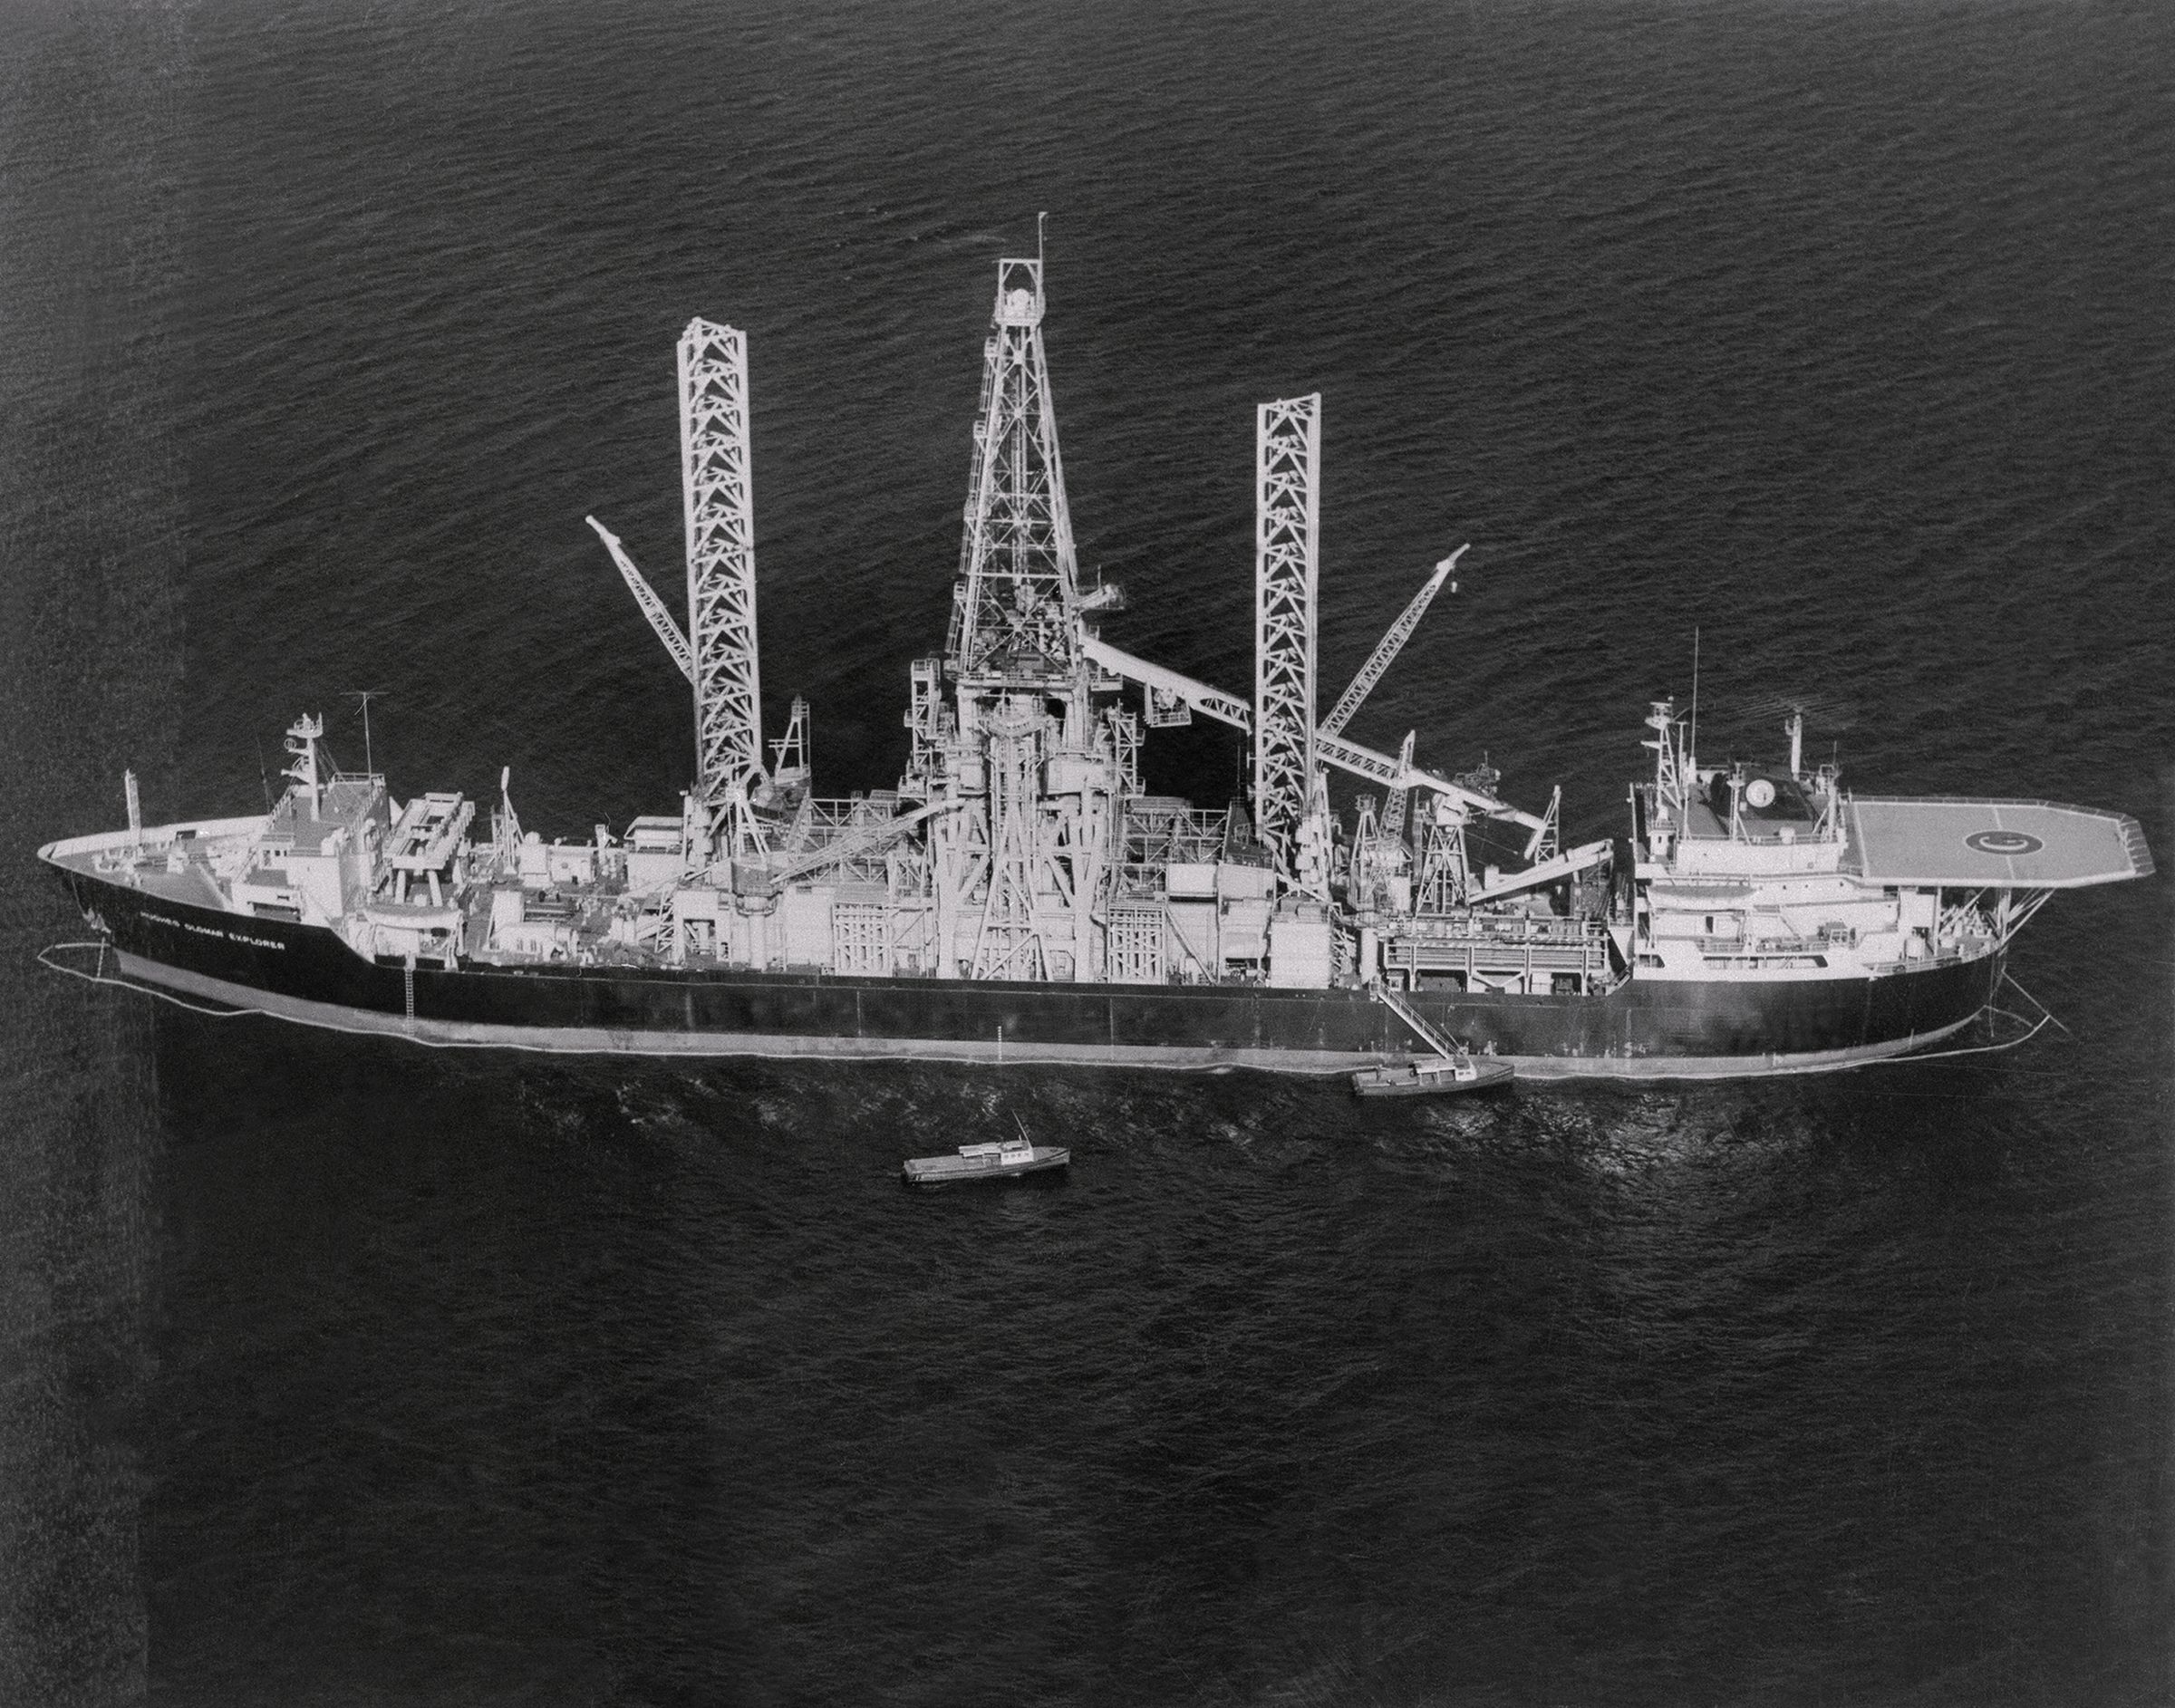 View of the CIA spy ship 'Glomar Explorer', research ship of Howard Hughes organization.